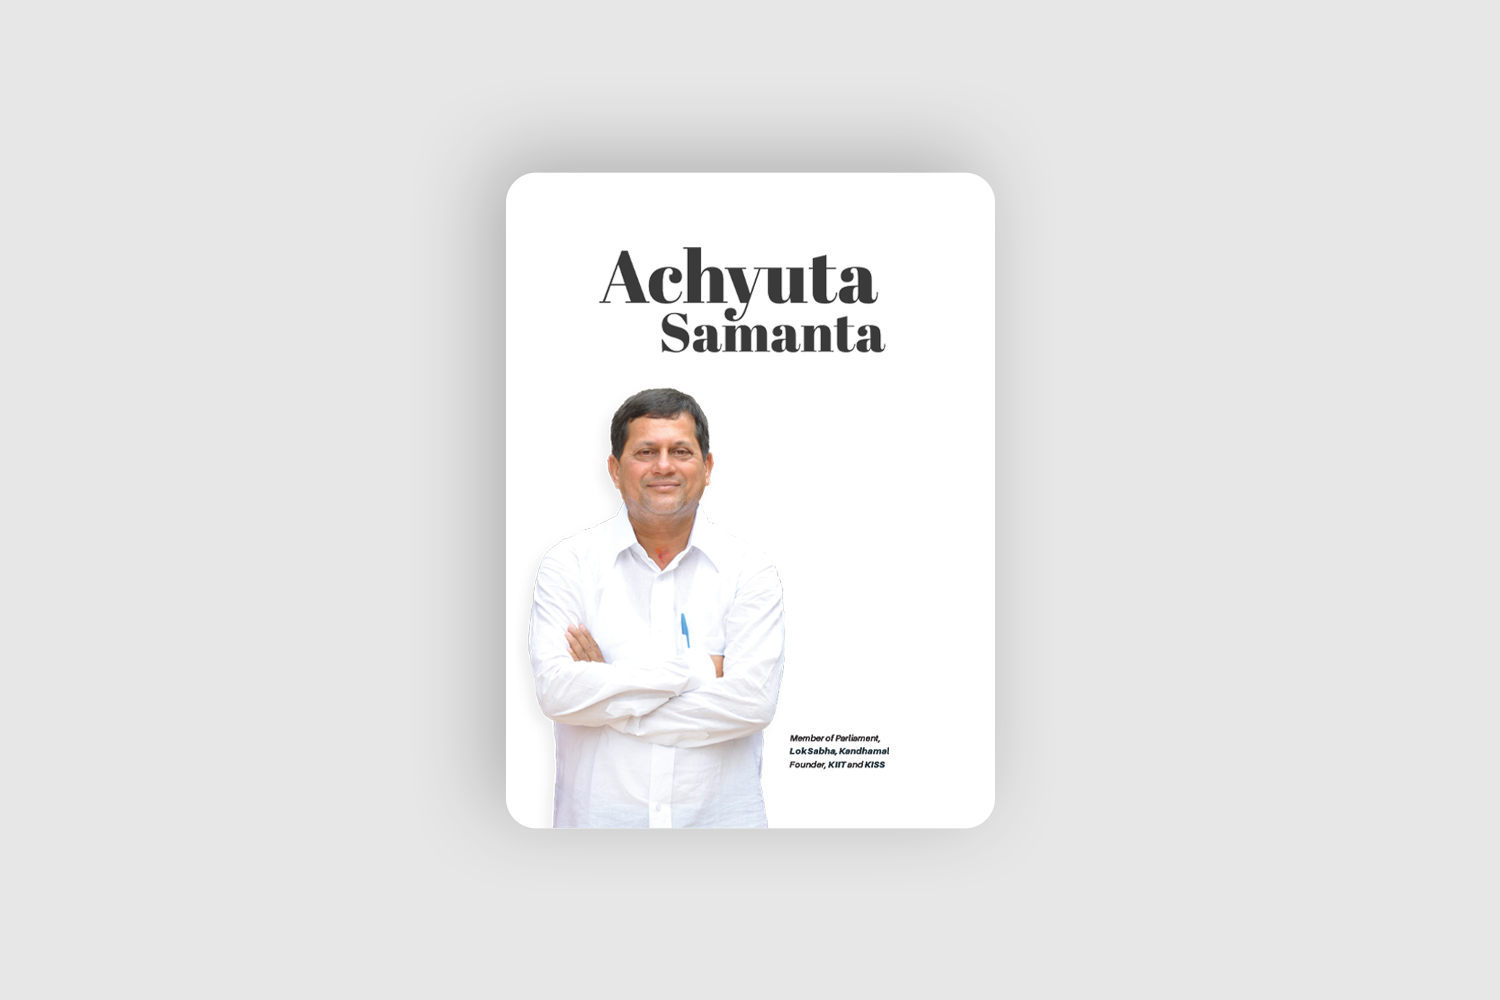 Achyuta Samanta Lifestory Booklet